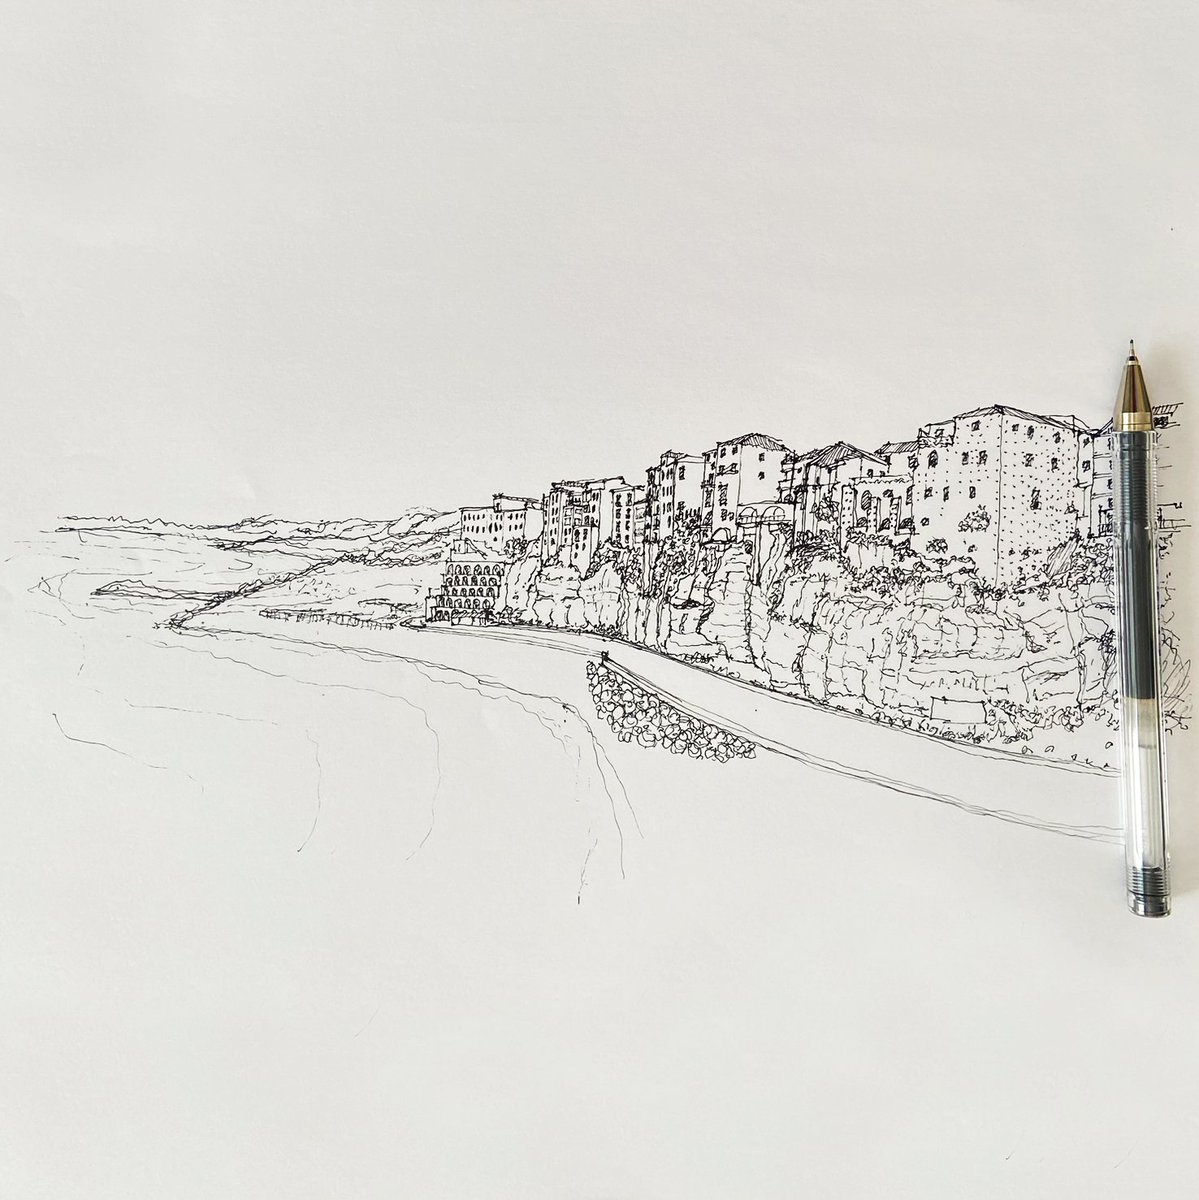 Panoramic view of Tropea's Rotonda Beach sketch.

#Tropea #RotondaBeach #Calabria #Italia #Art #Beach #PanoramicView #Sketch #UrbanSketch #SketchDaily #InkDrawing